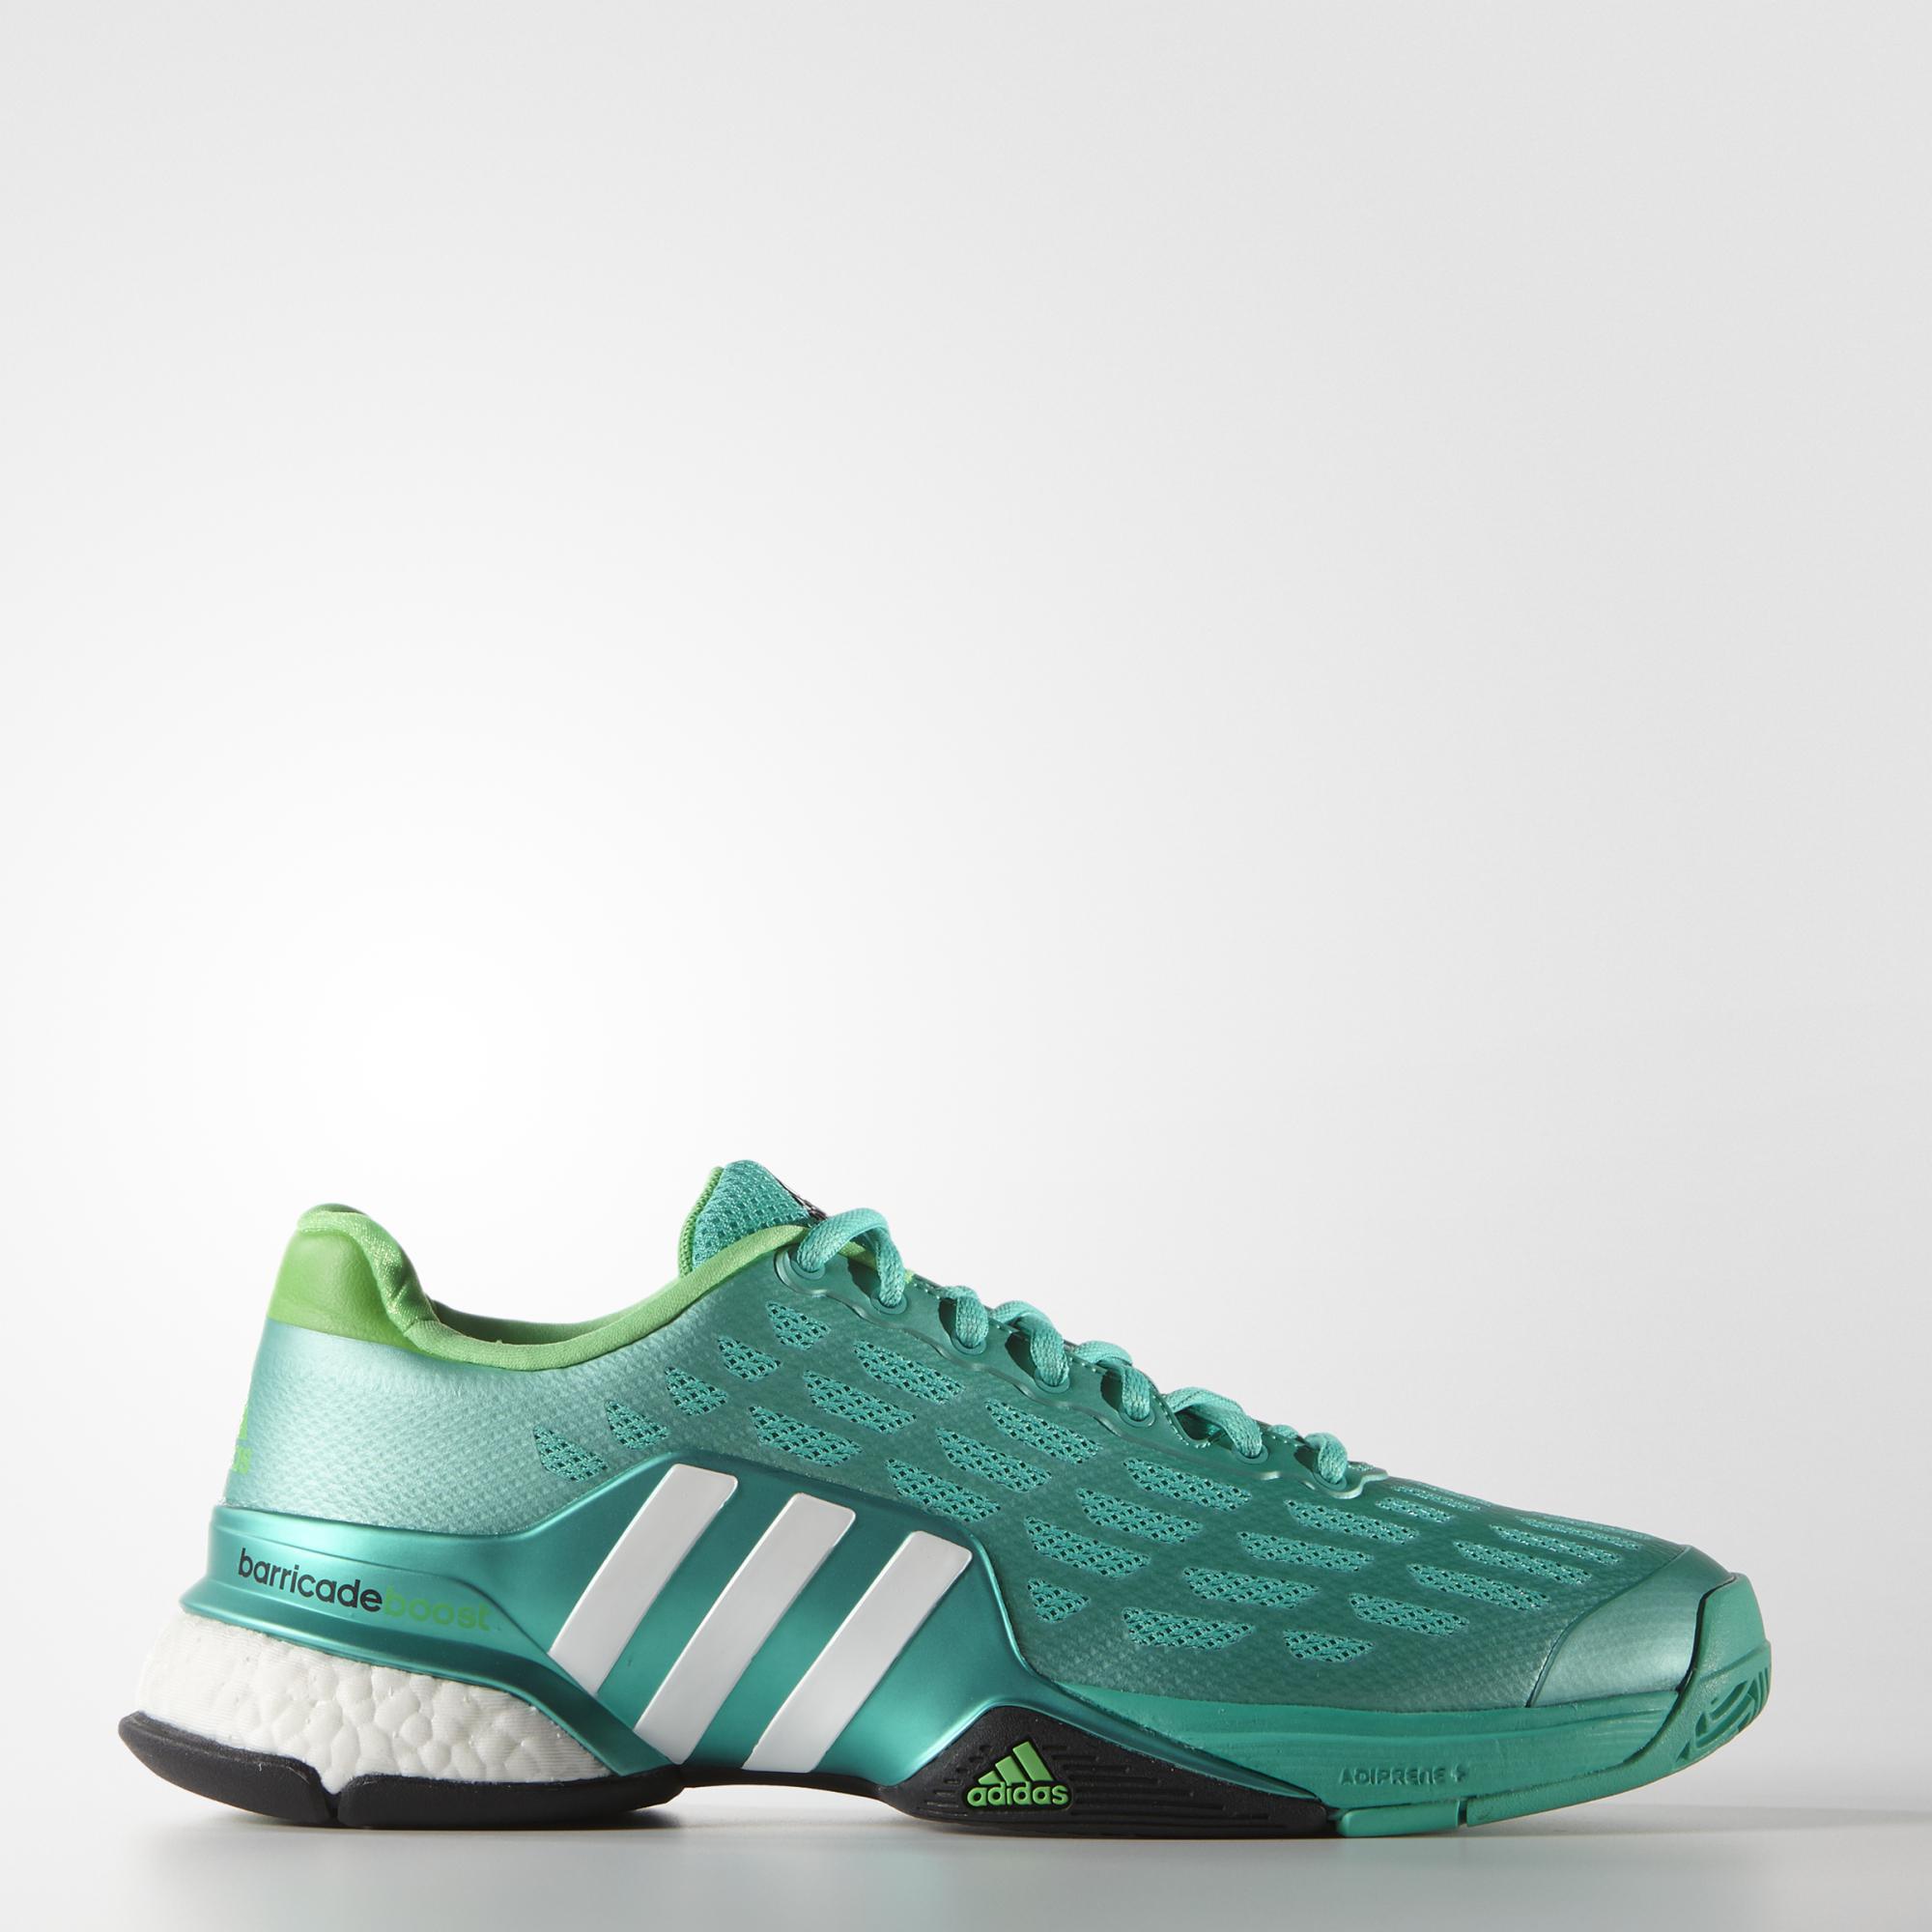 Elevado estimular negocio Adidas Mens Barricade Boost 2016 Tennis Shoes - Green - Tennisnuts.com